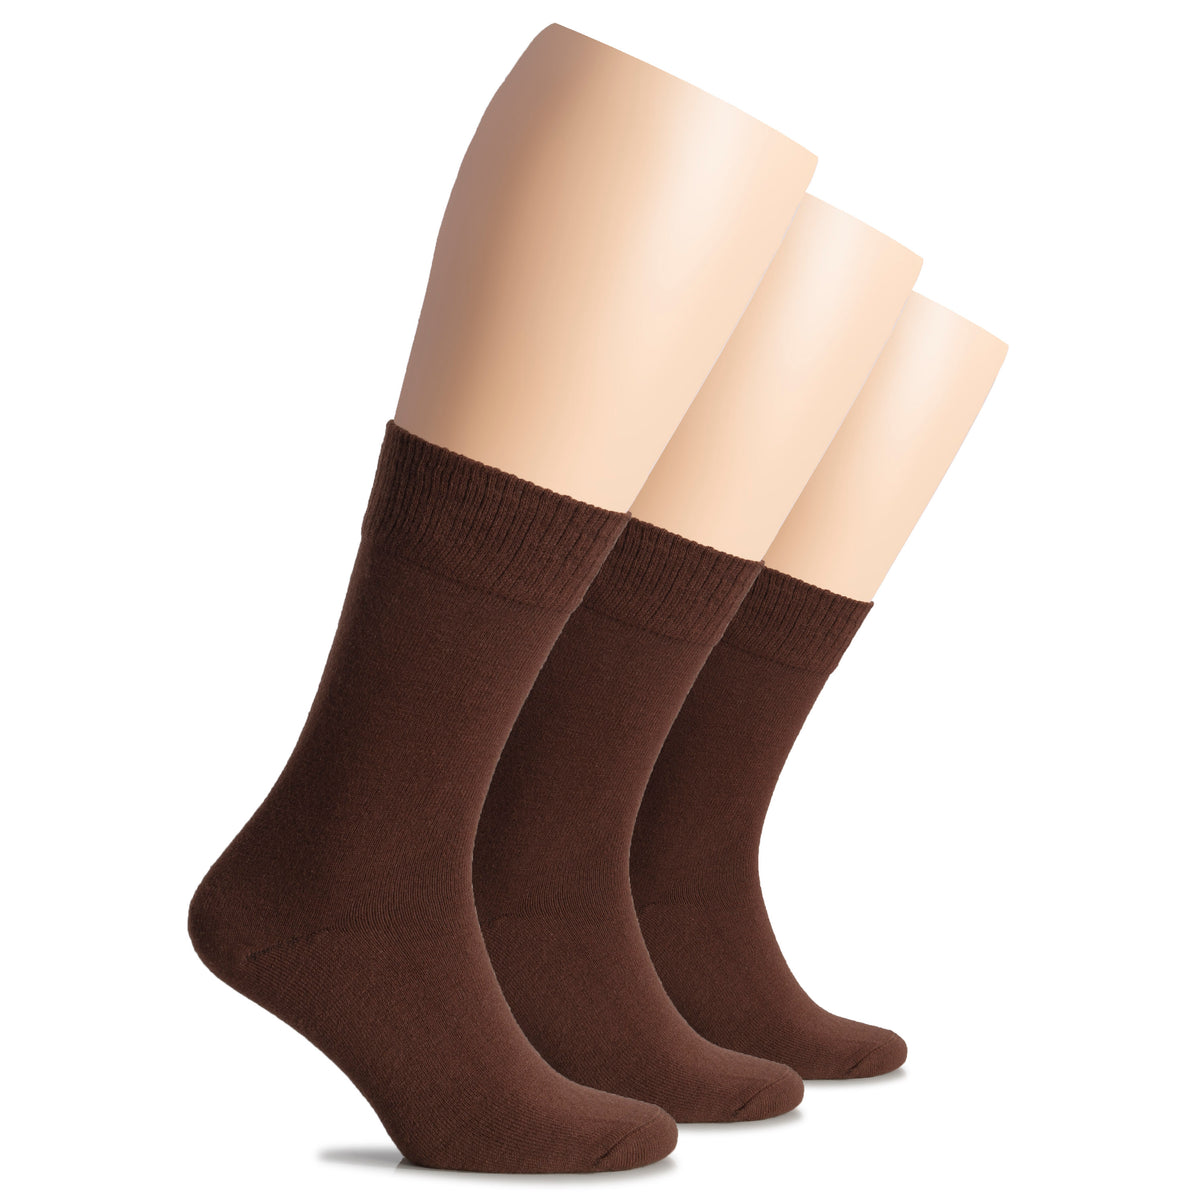 Hugh Ugoli Women's Wool Crew Socks, Warm, Soft, 3 Pairs | Shoe Size: 6-9 | Indigo Blue